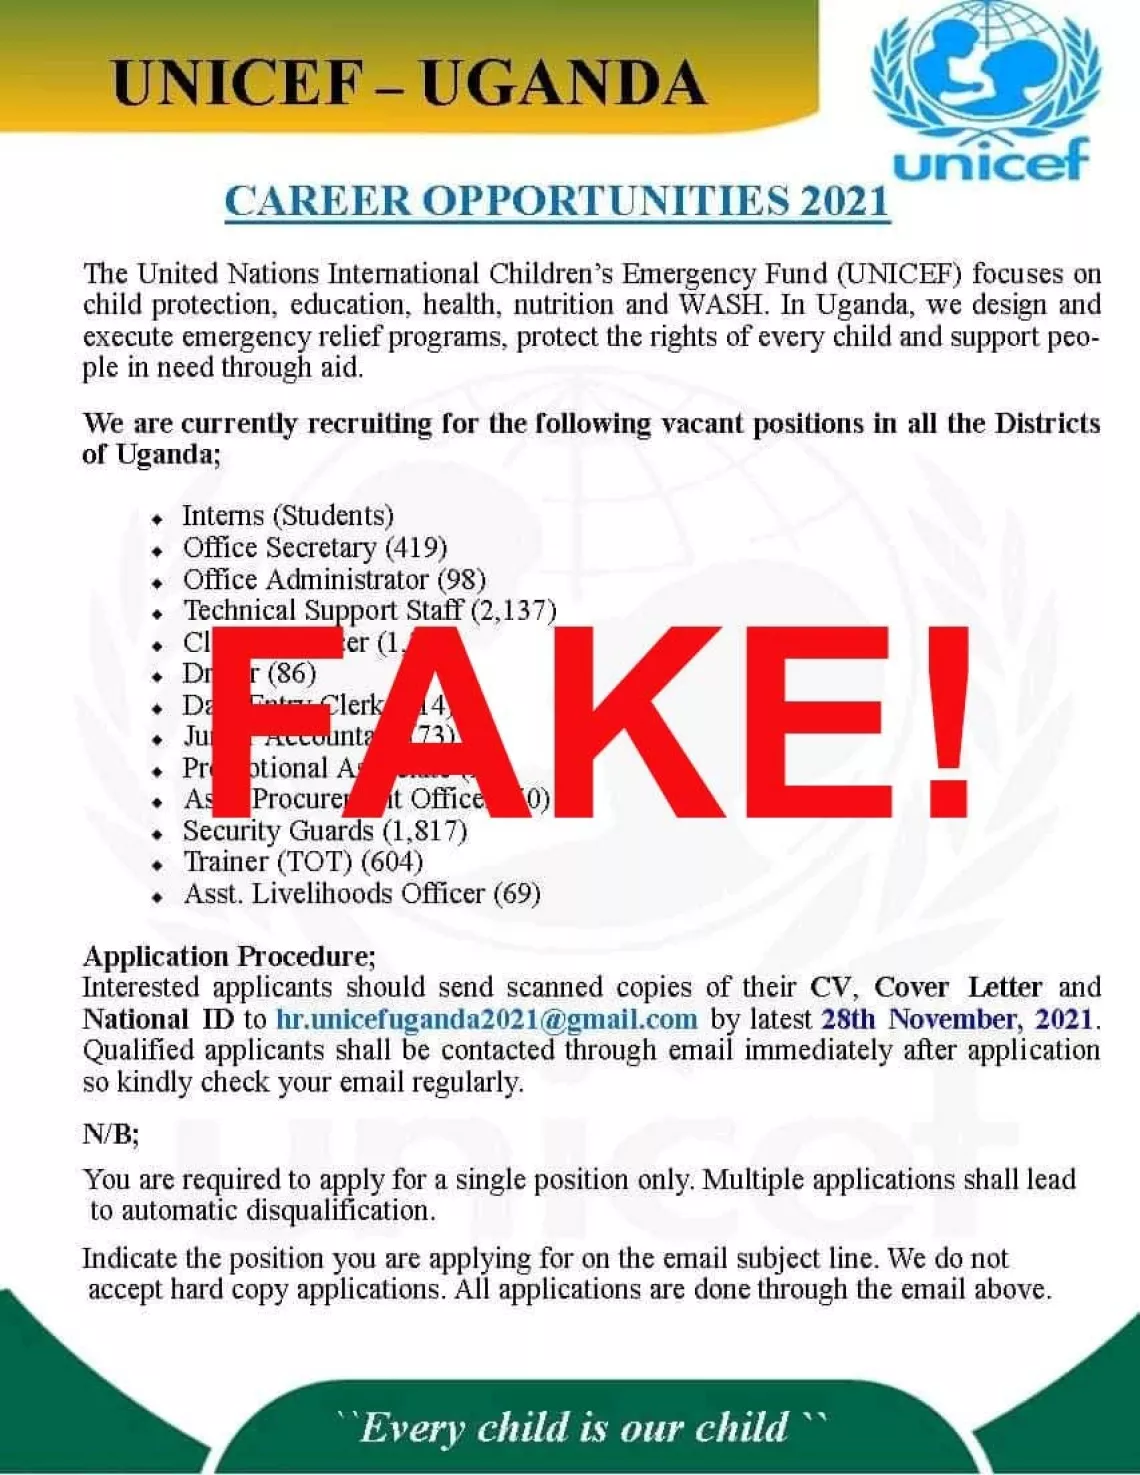 UNICEF Uganda False Fake Job Advert Alert on WhatsApp message